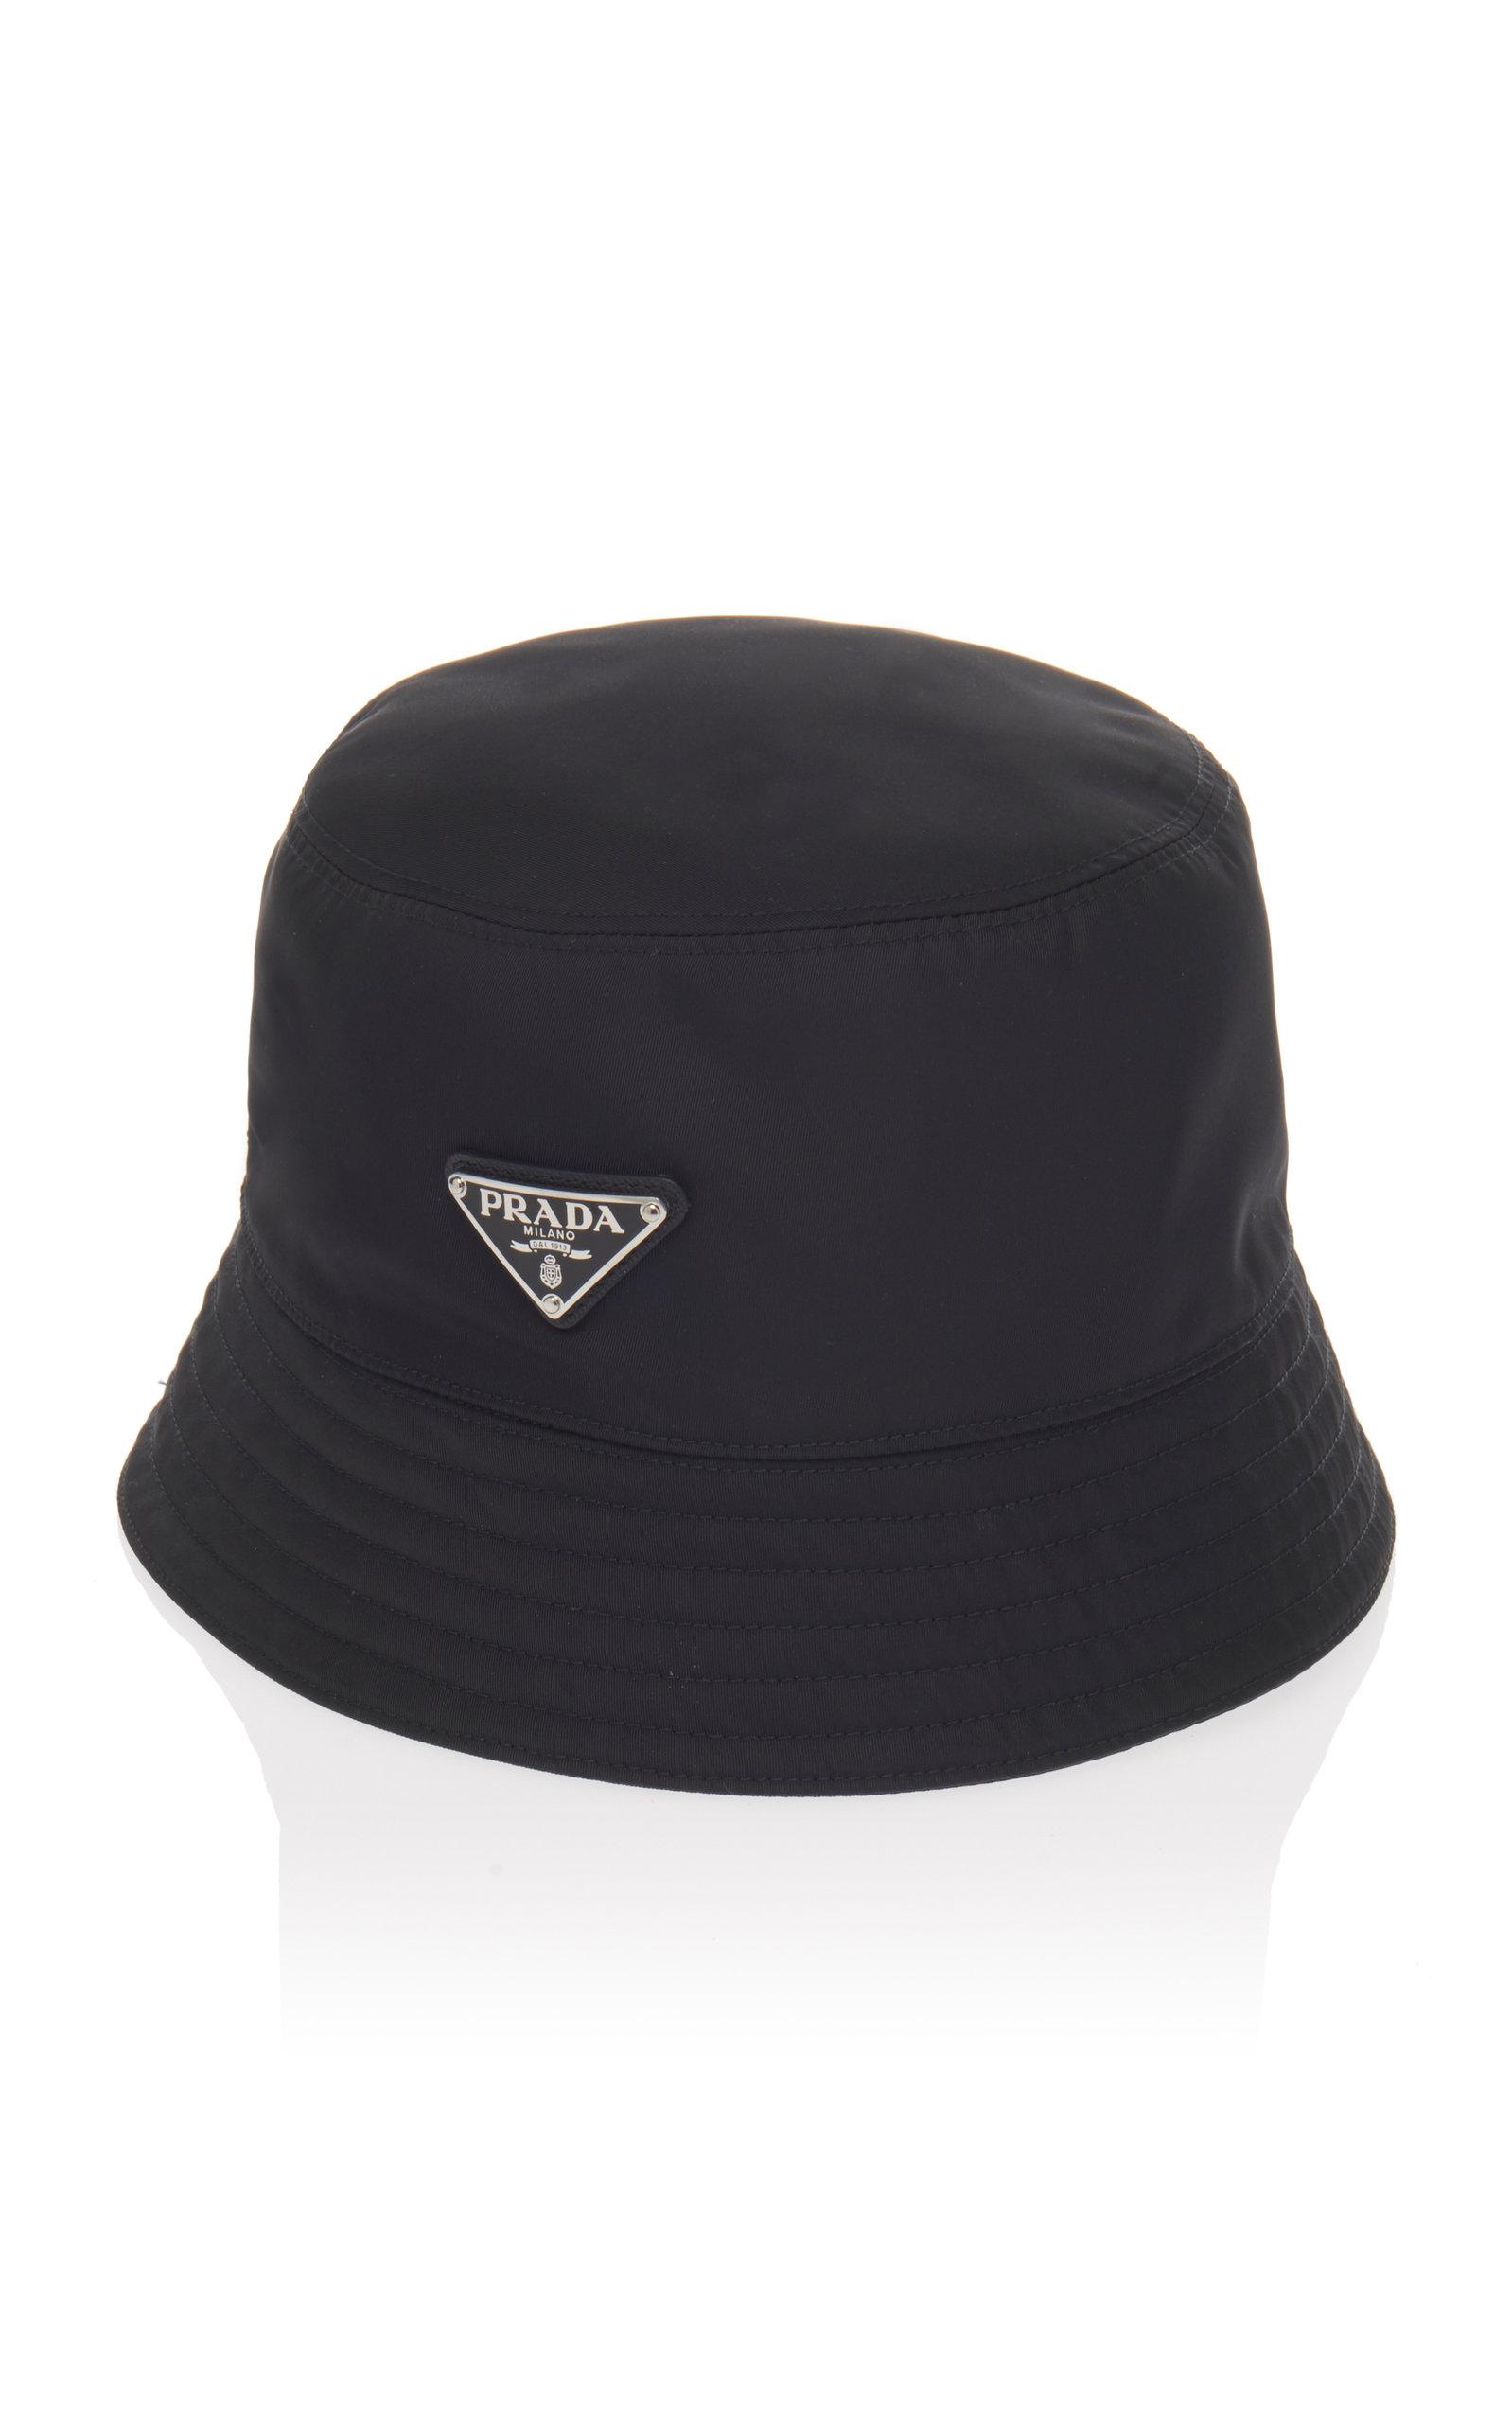 Prada Synthetic Shell Bucket Hat in Black - Lyst